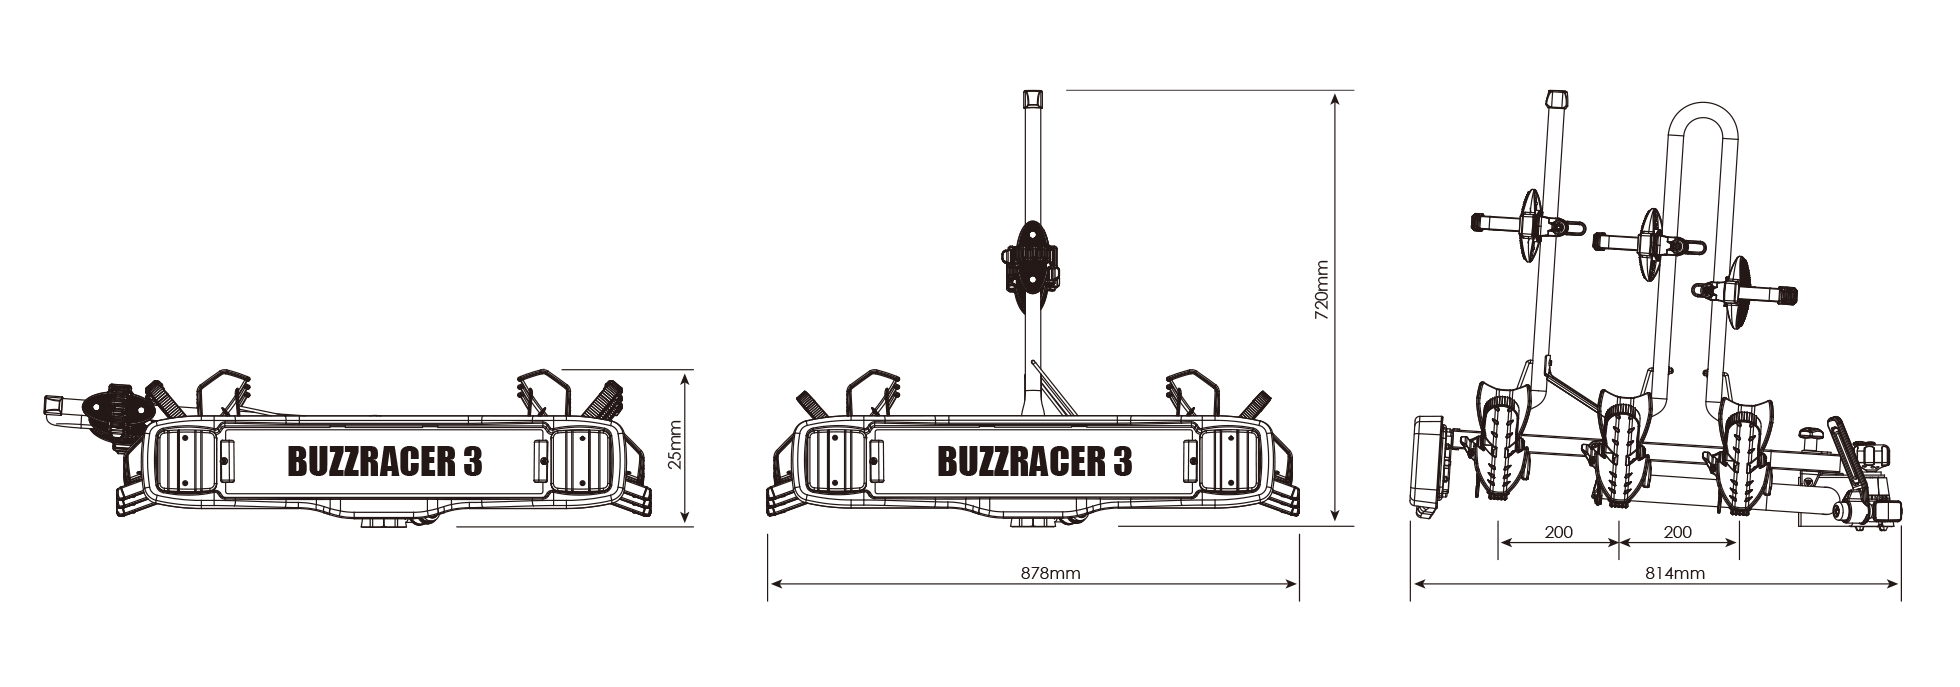 BUZZRACK BuzzRacer 3 technical specifications